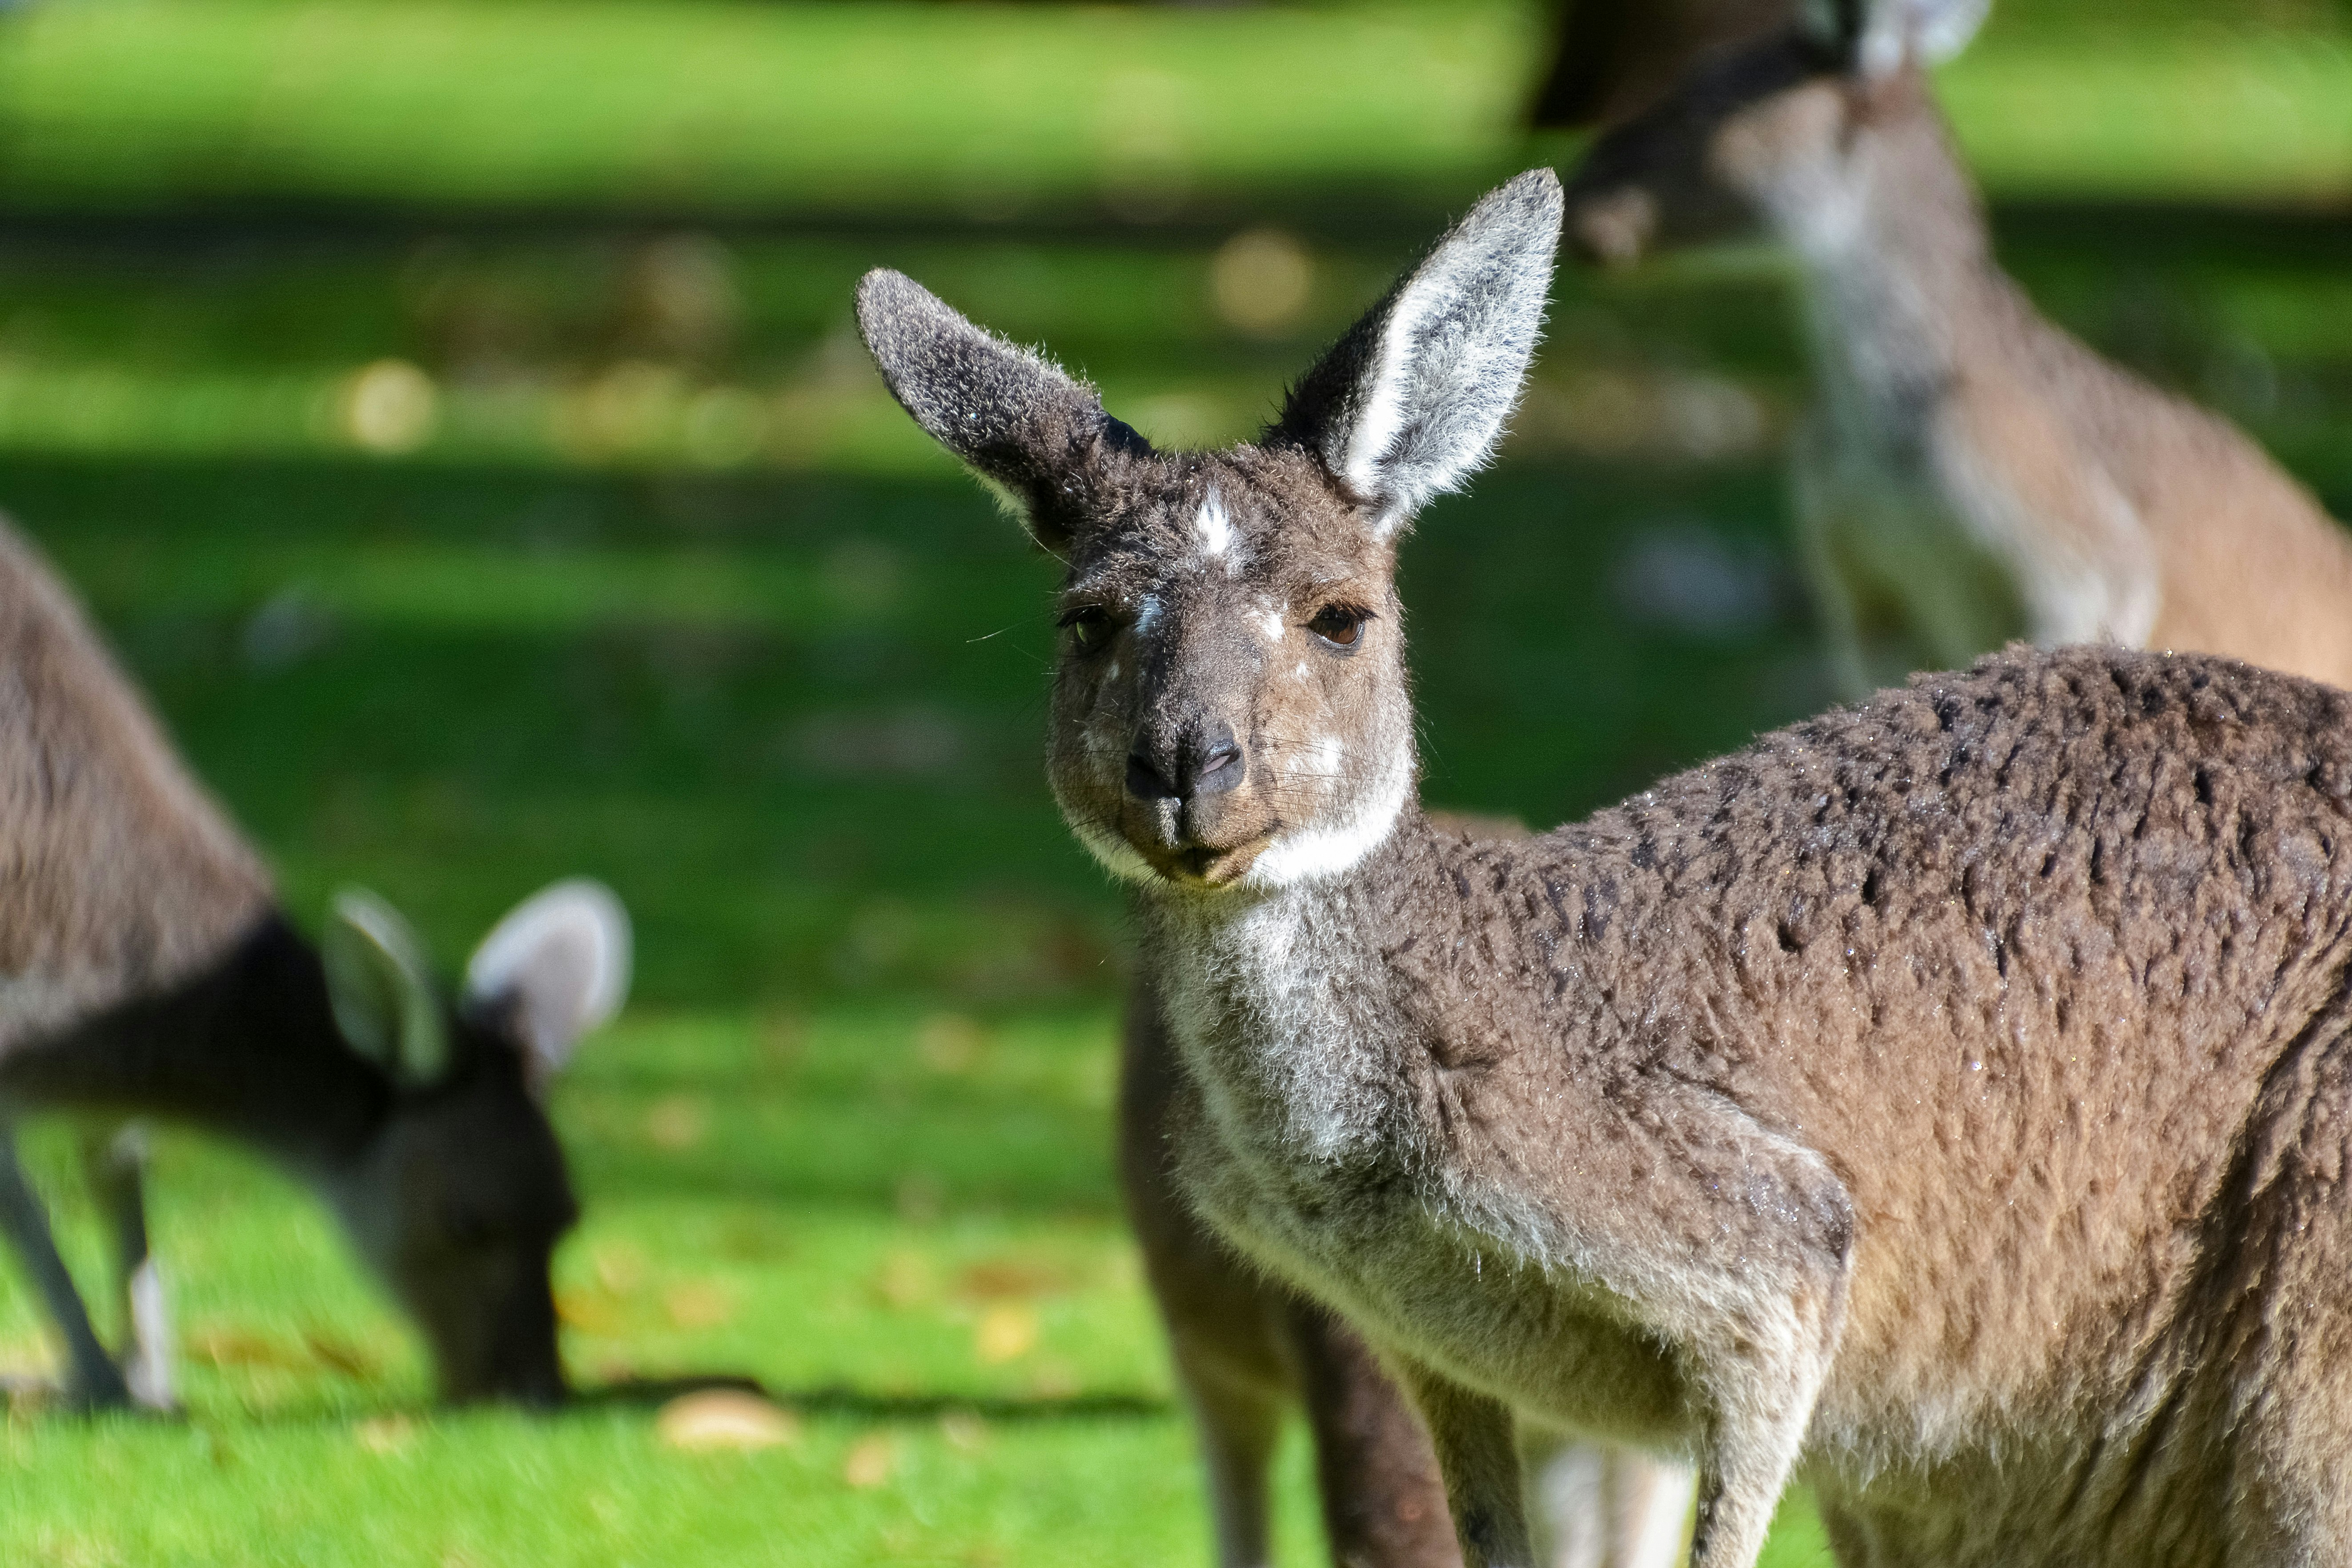 gray kangaroo on green grass field during daytime